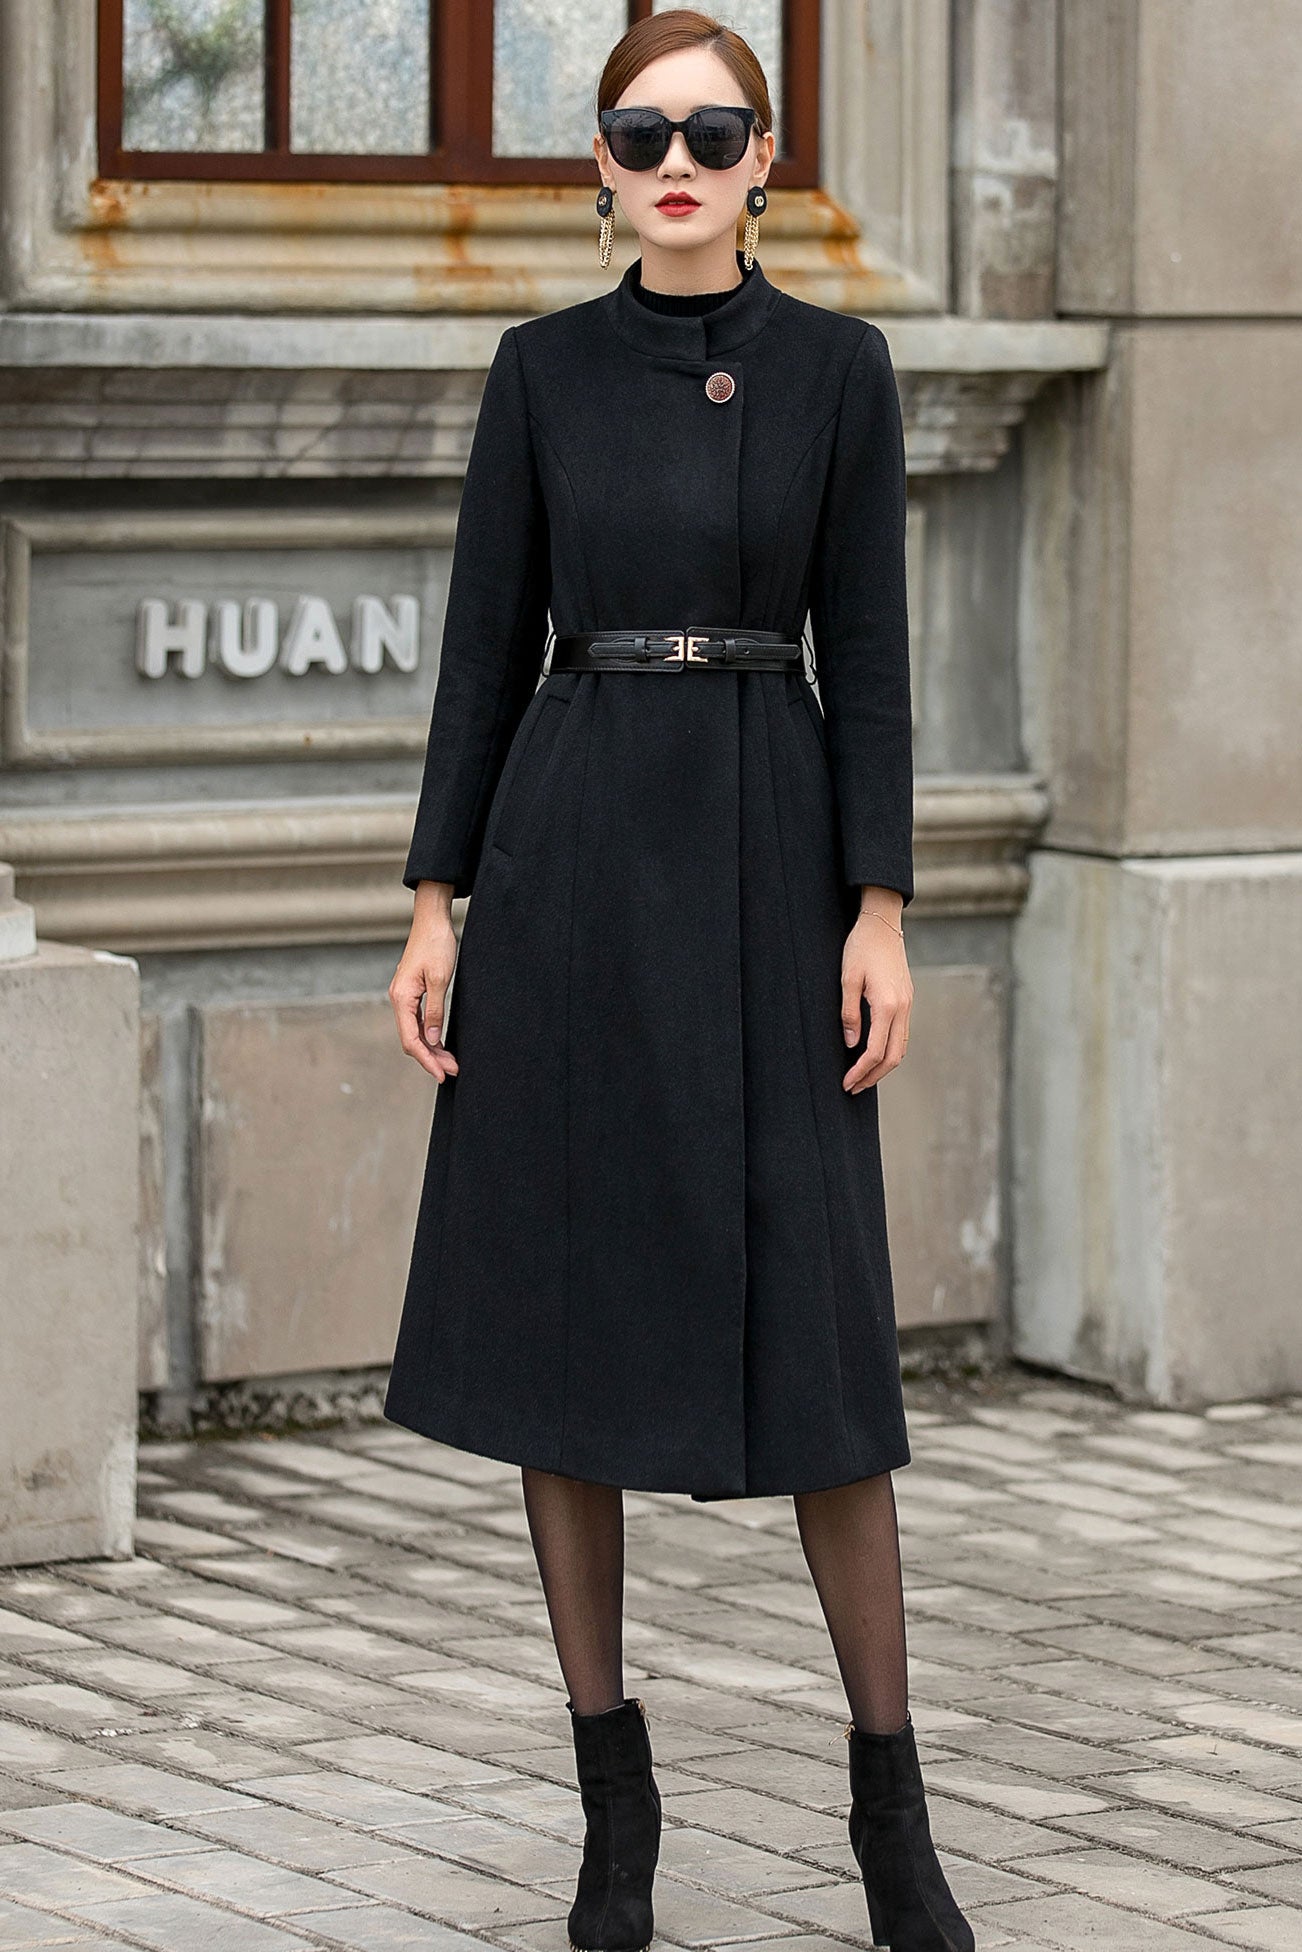 black wool coats for women